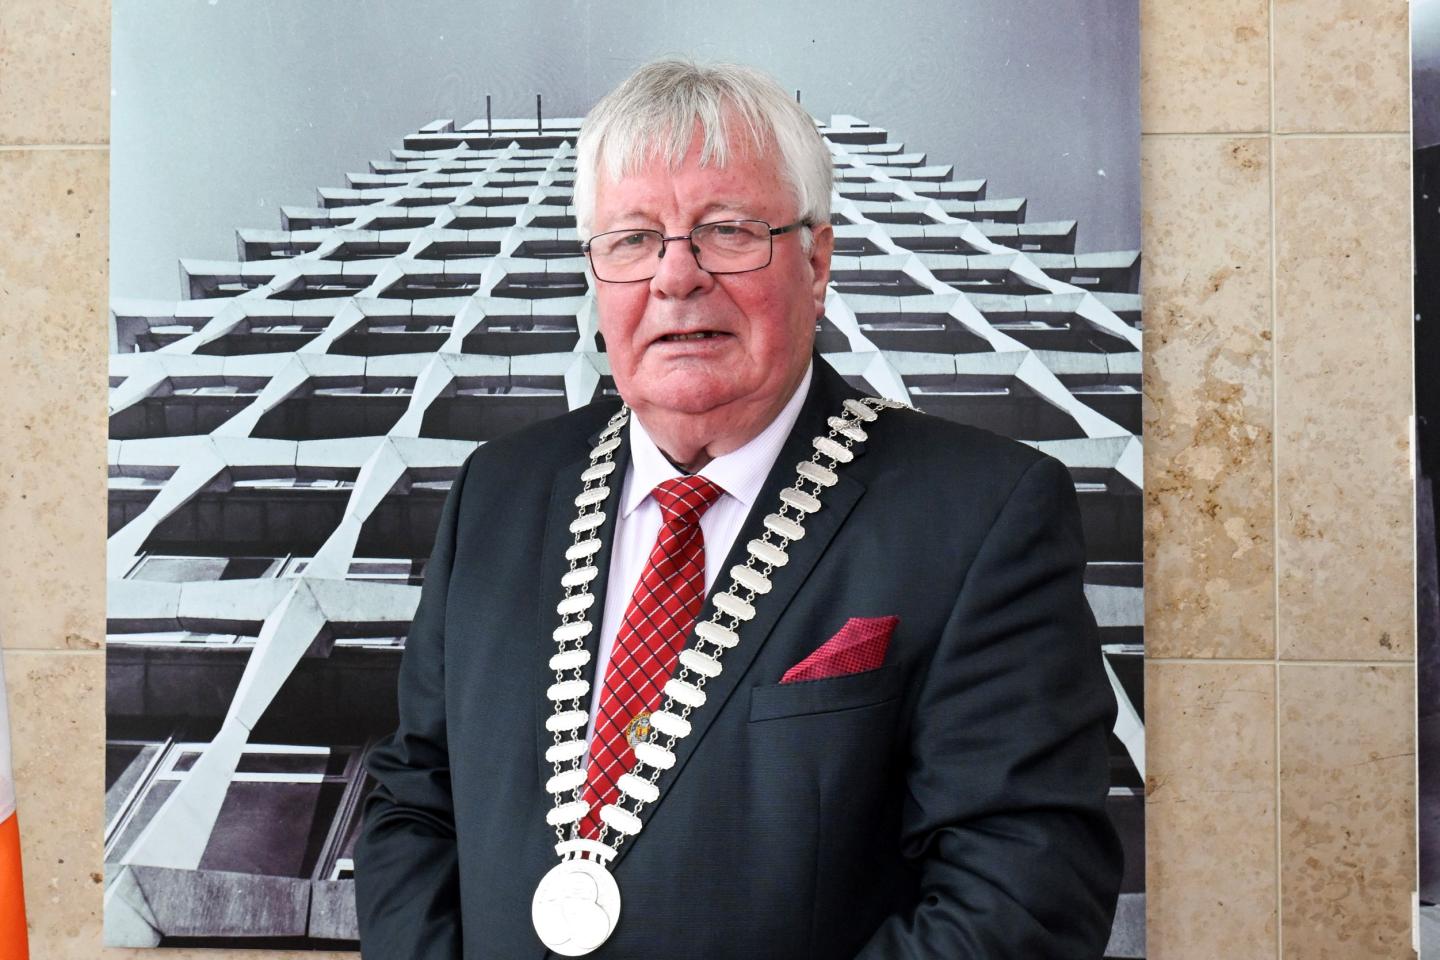 Mayor of the County of Cork, Cllr. Joe Carroll.